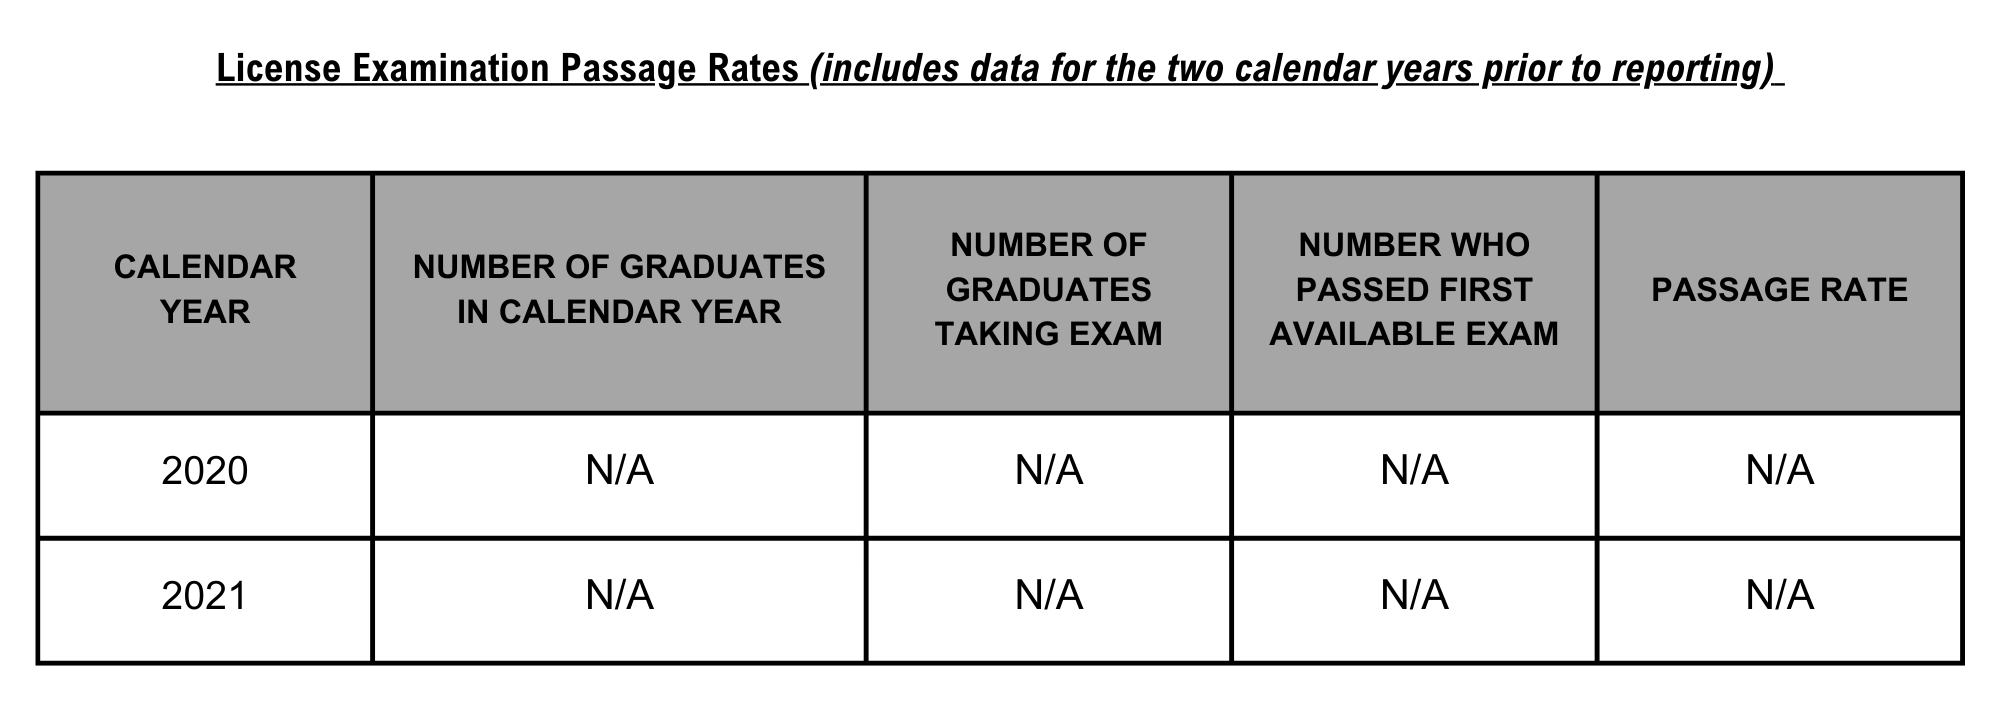 07 SPFS License Examination Passage Rates Welding PIF OL CA